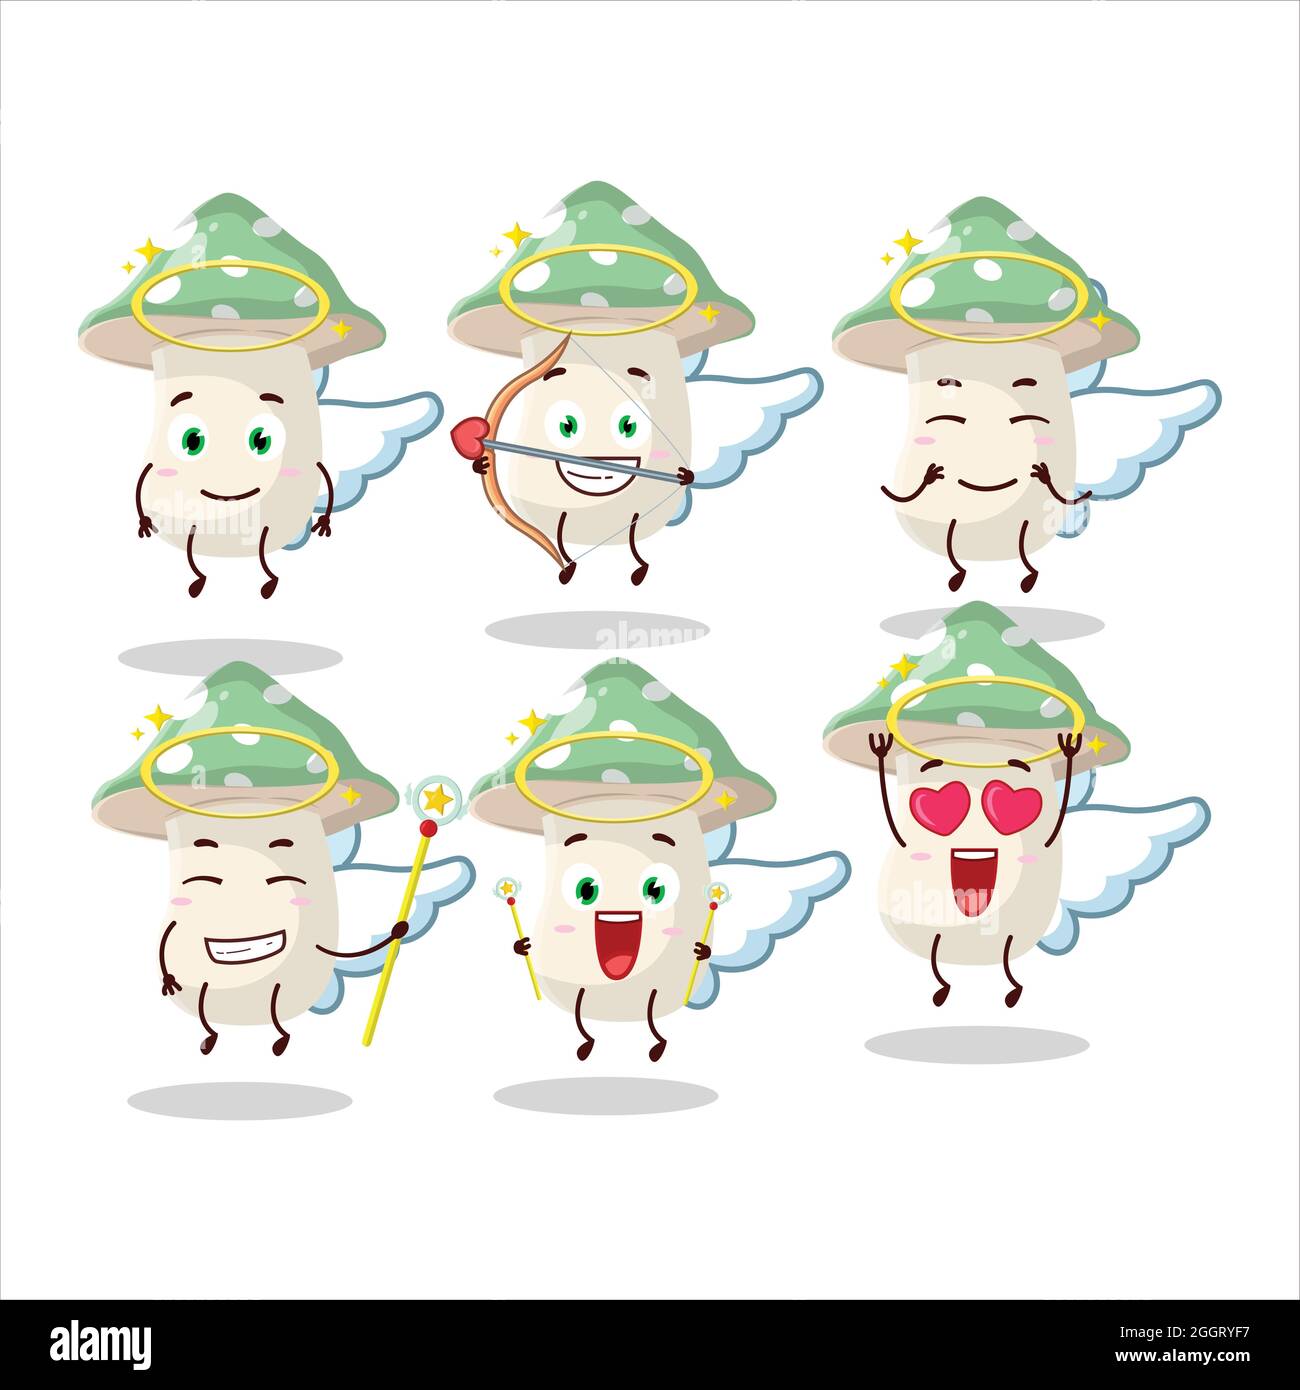 Green amanita cartoon designs as a cute angel character. Vector illustration Stock Vector